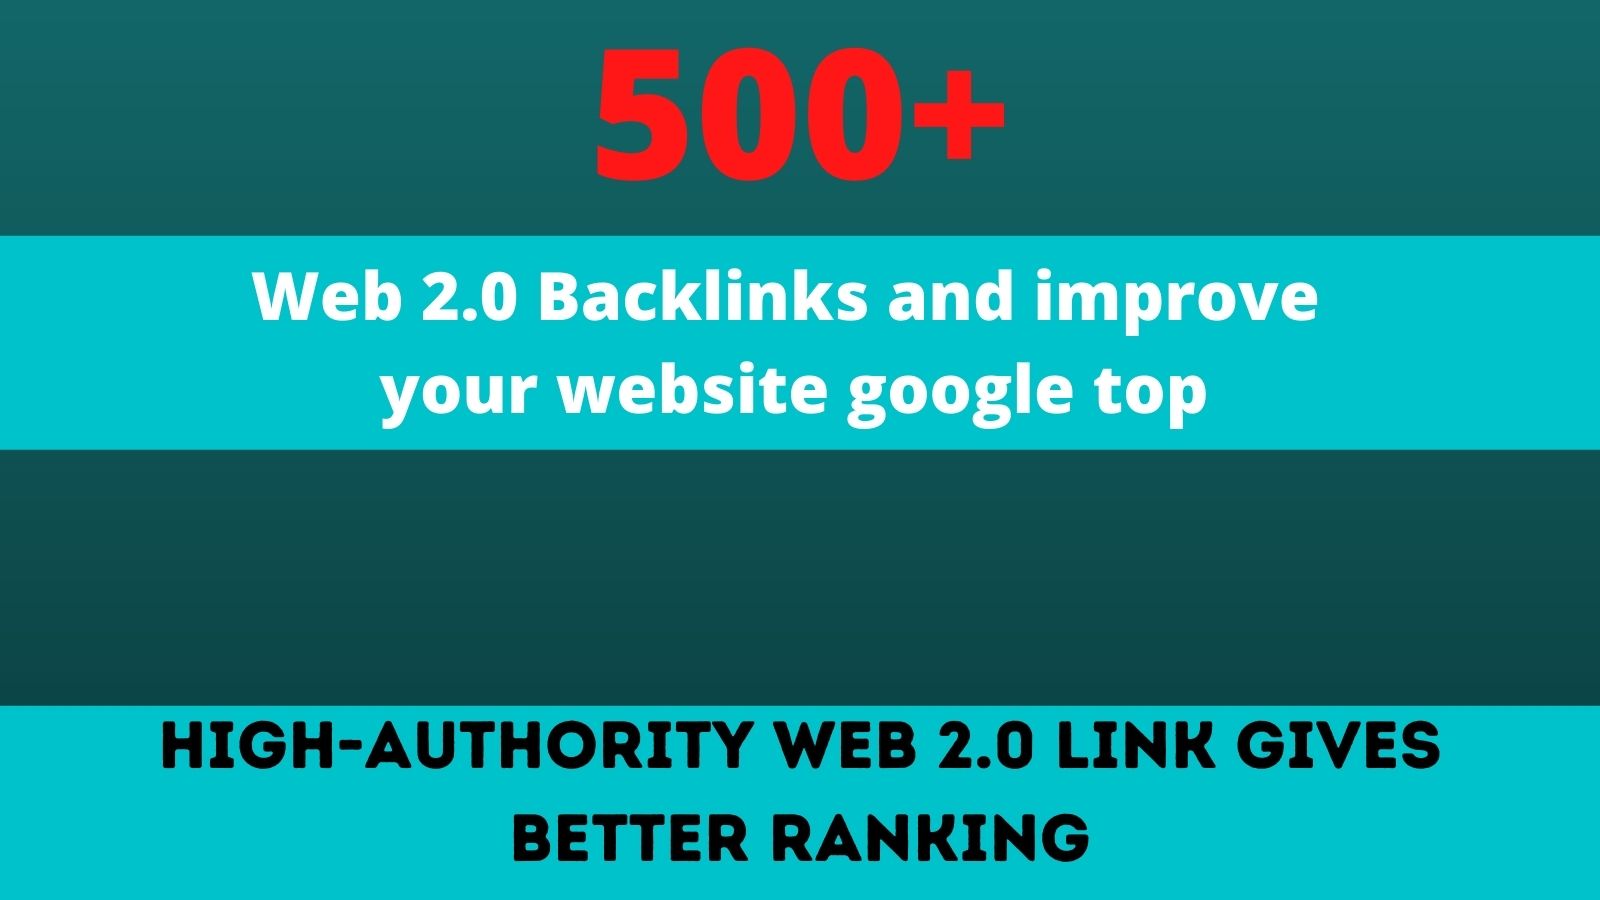 Get 500+ Natural Web 2.0 Backlinks and improve your website google top